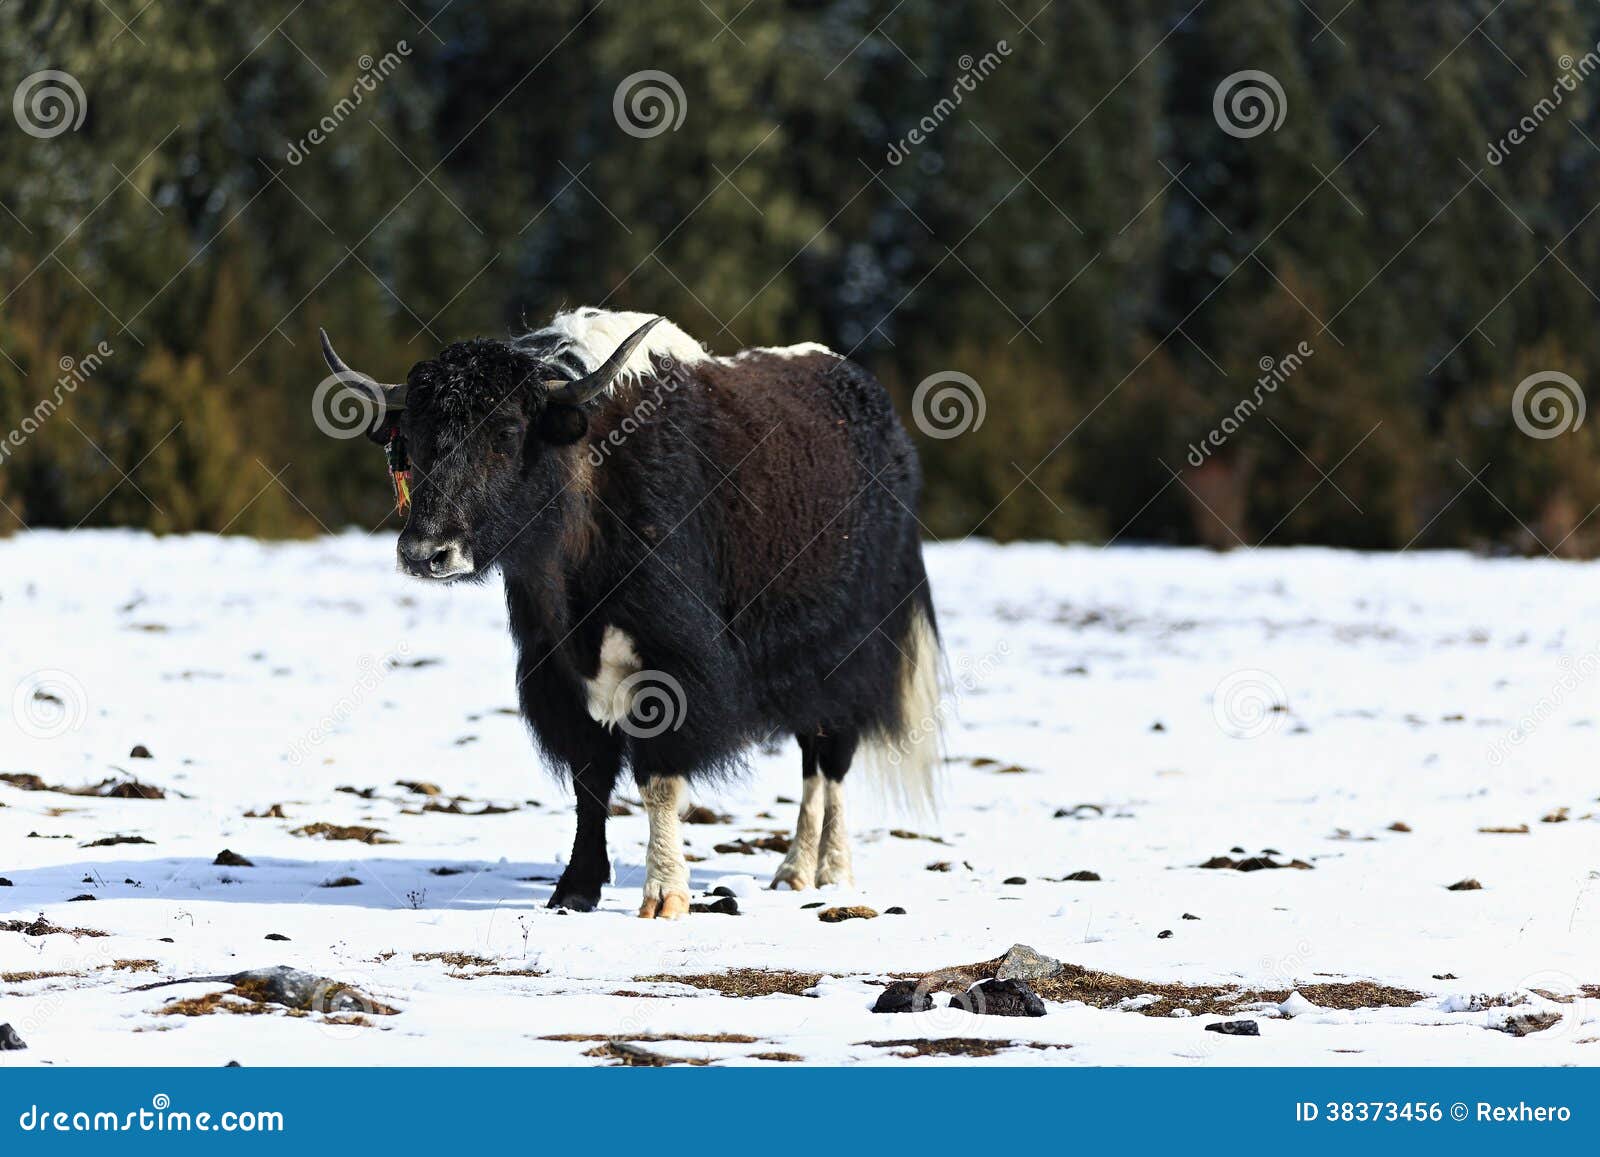 yak in the snowfields